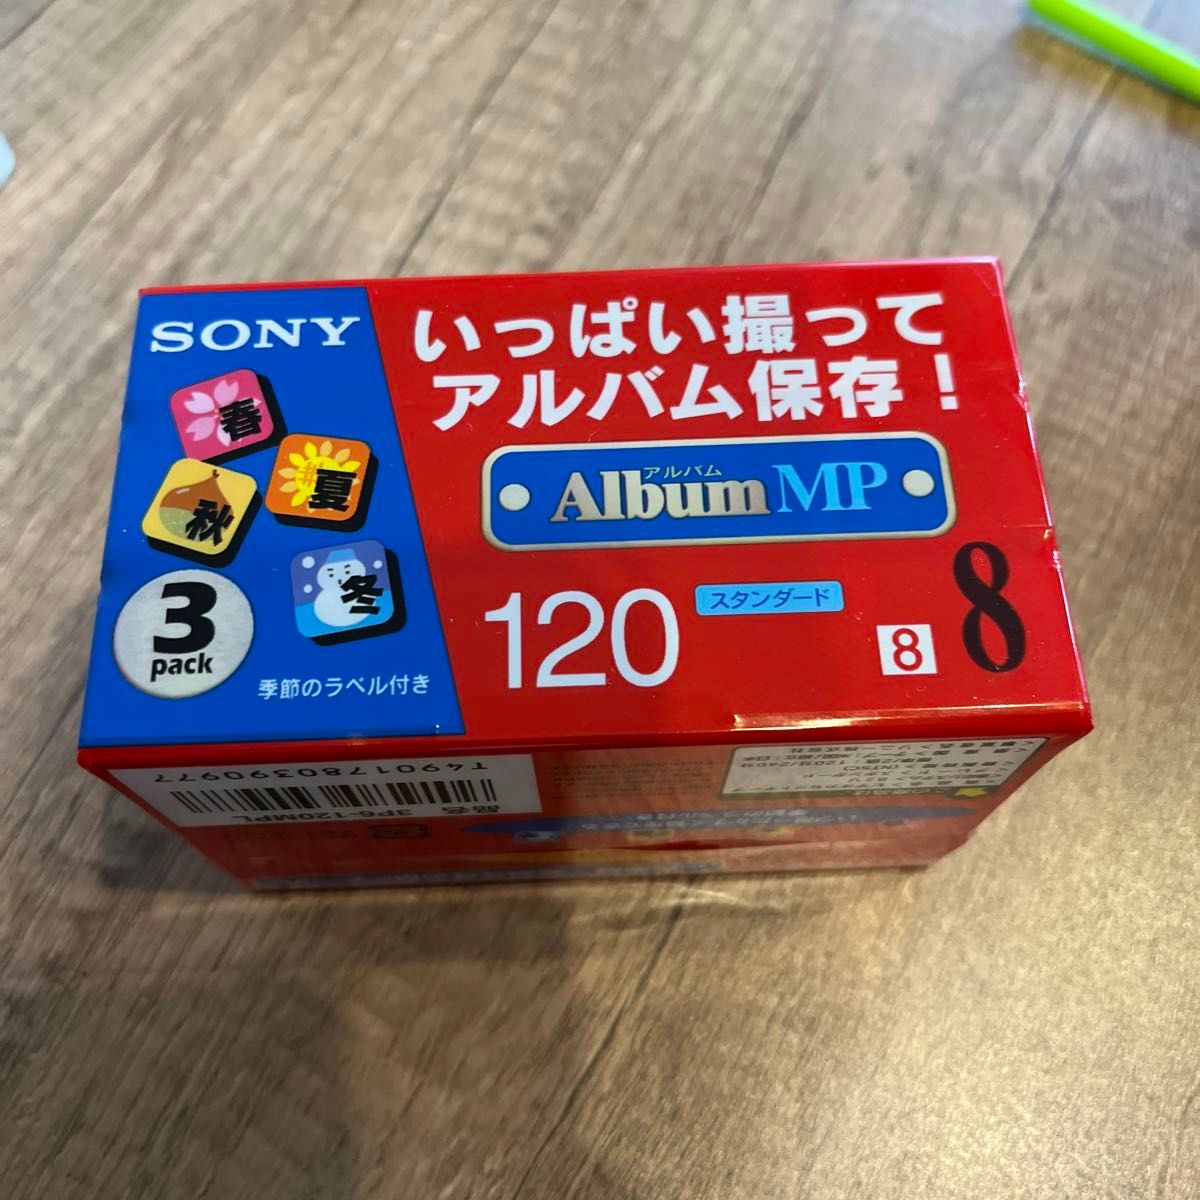 SONY 8ミリビデオカセット 120分 MPタイプ3巻パック 3P6-120MPL